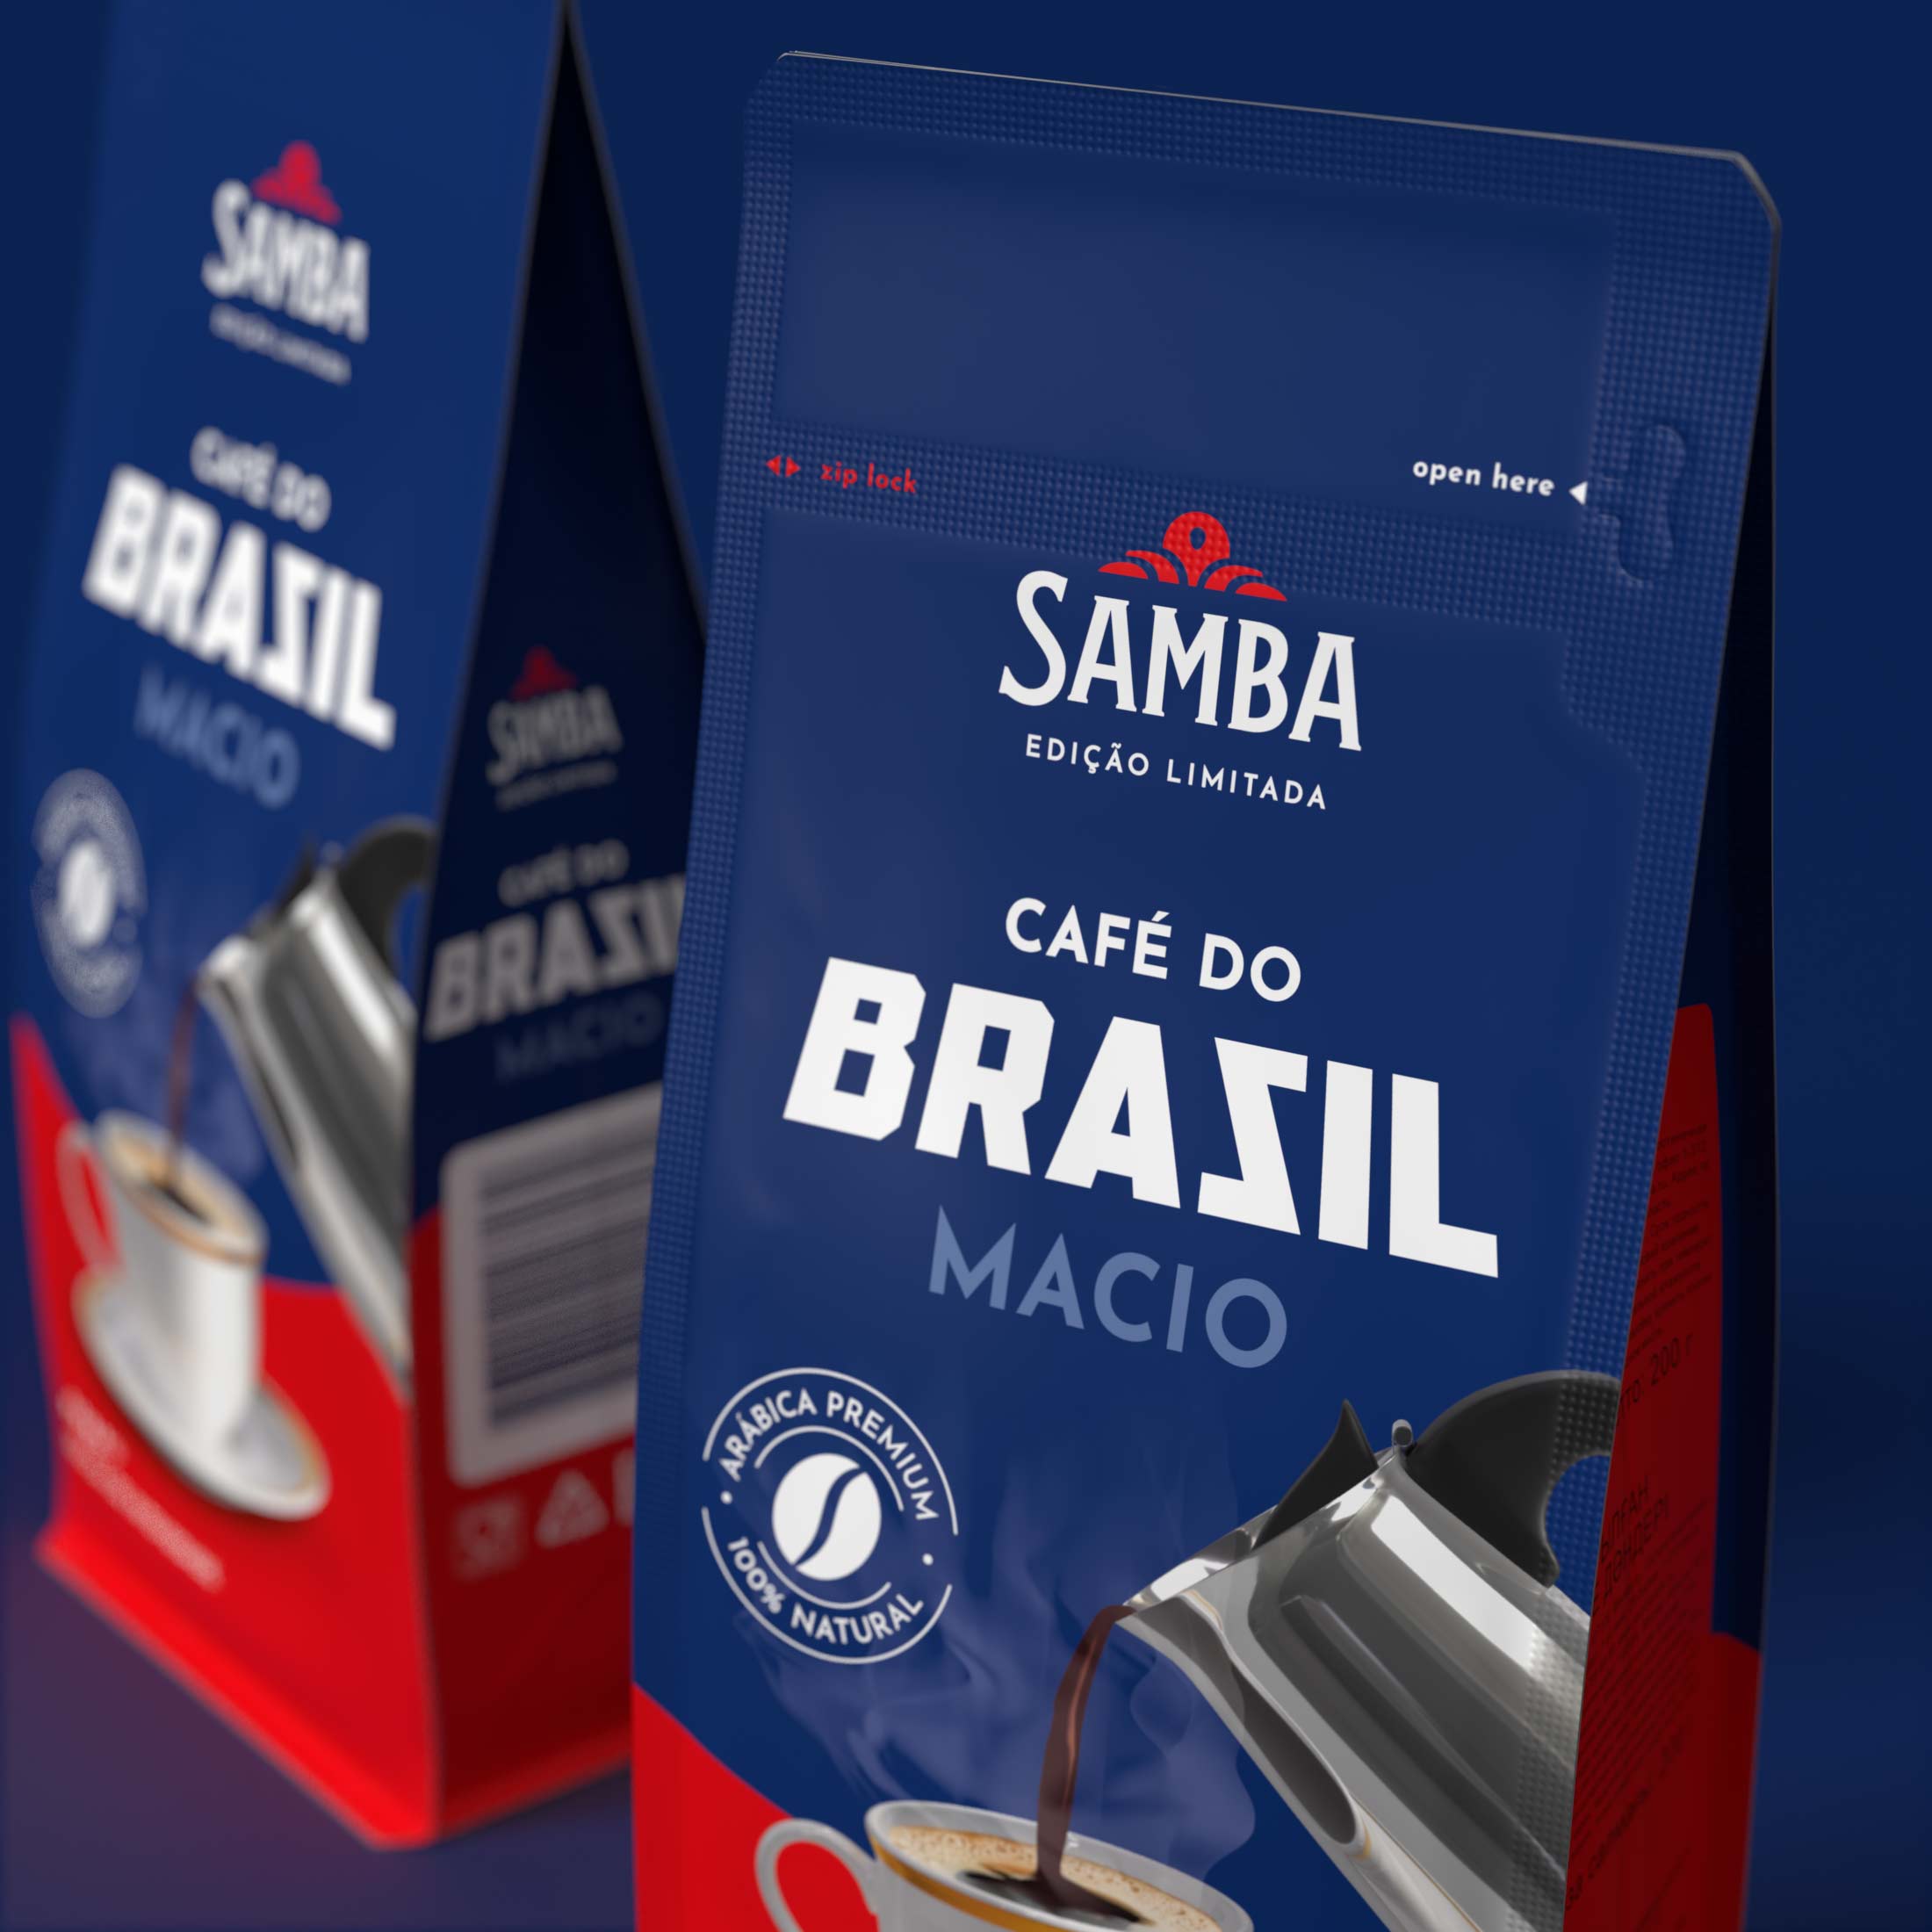 Samba Cafe Brazil Macio